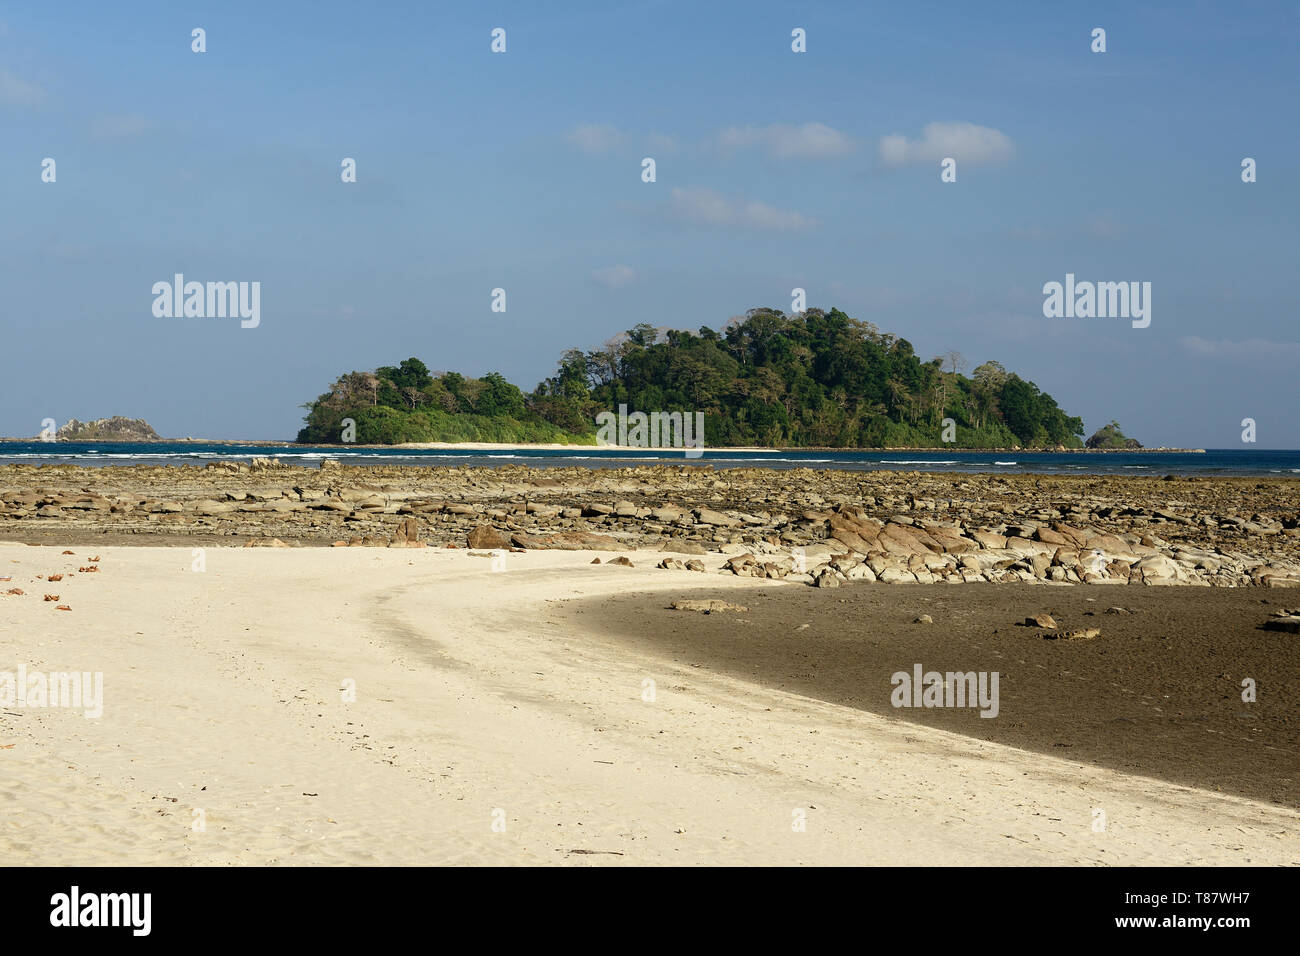 Kalipur Beach of the Andaman and Nicobar Islands, India Stock Photo